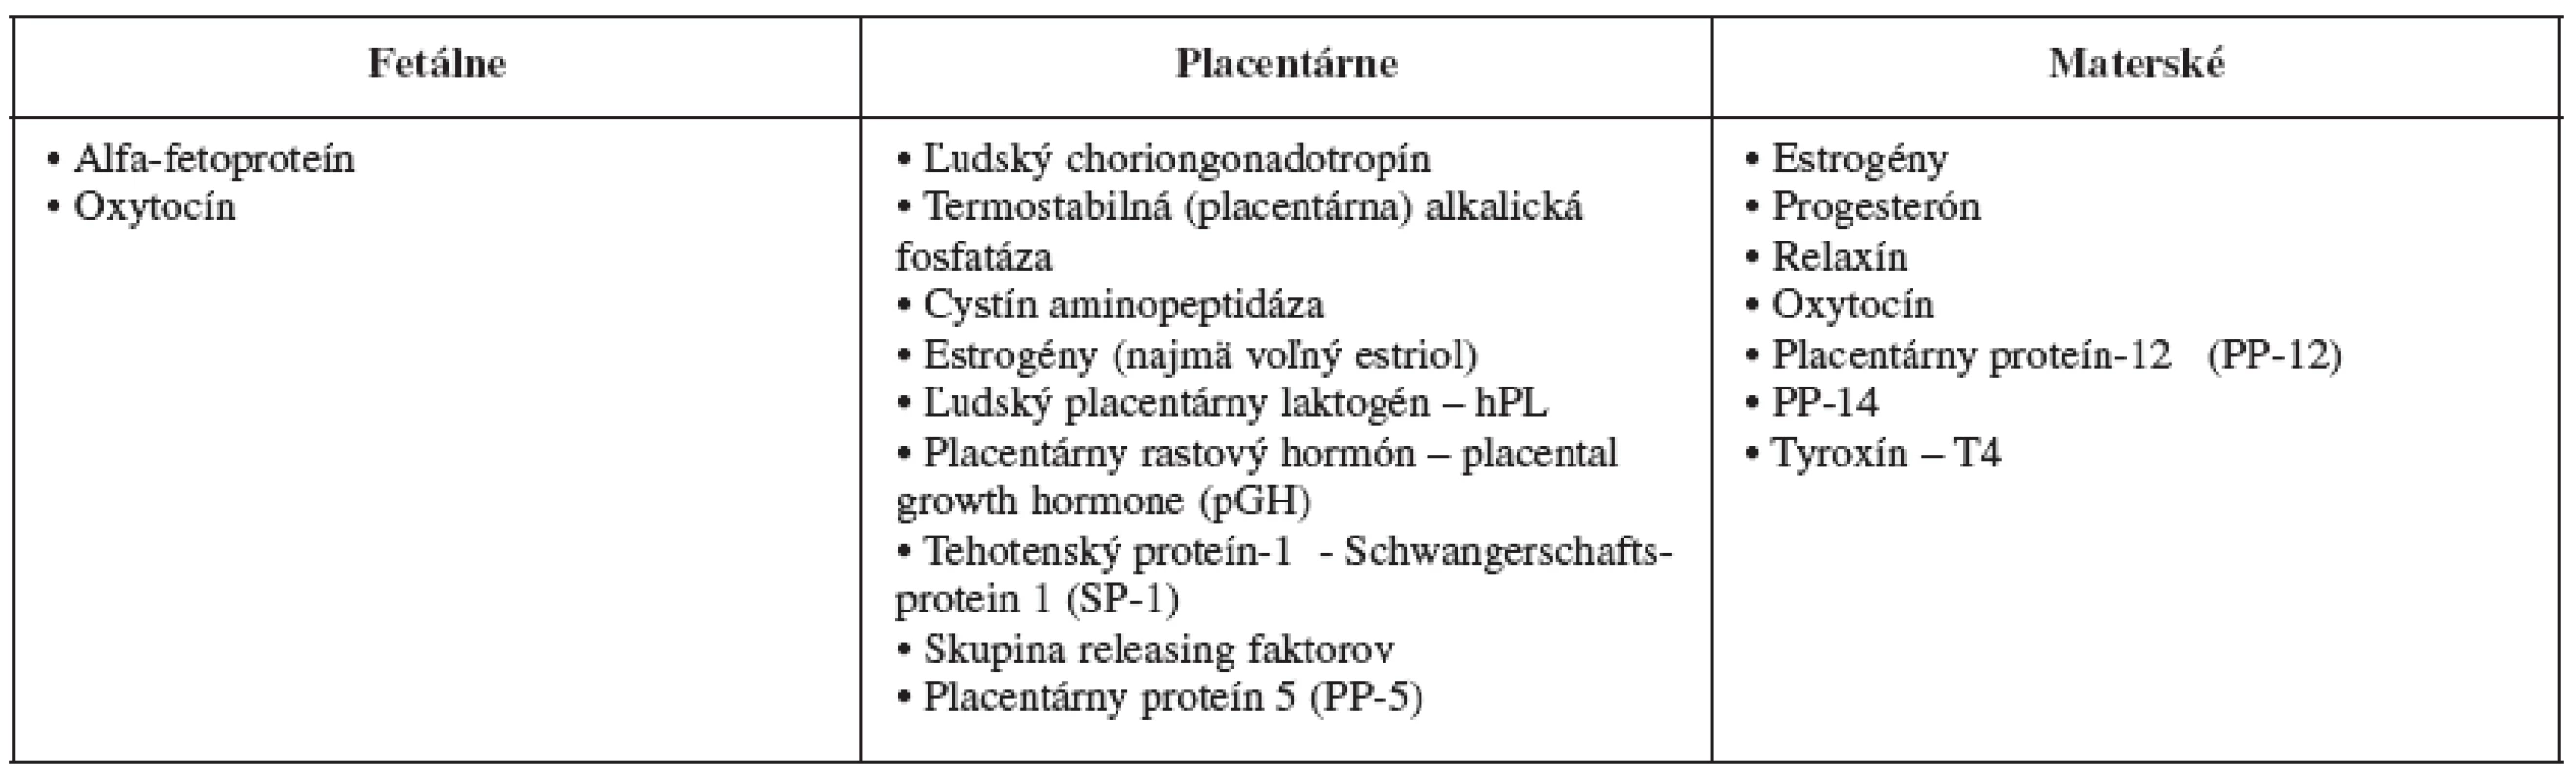 Produkty zvýšenej syntézy počas gravidity